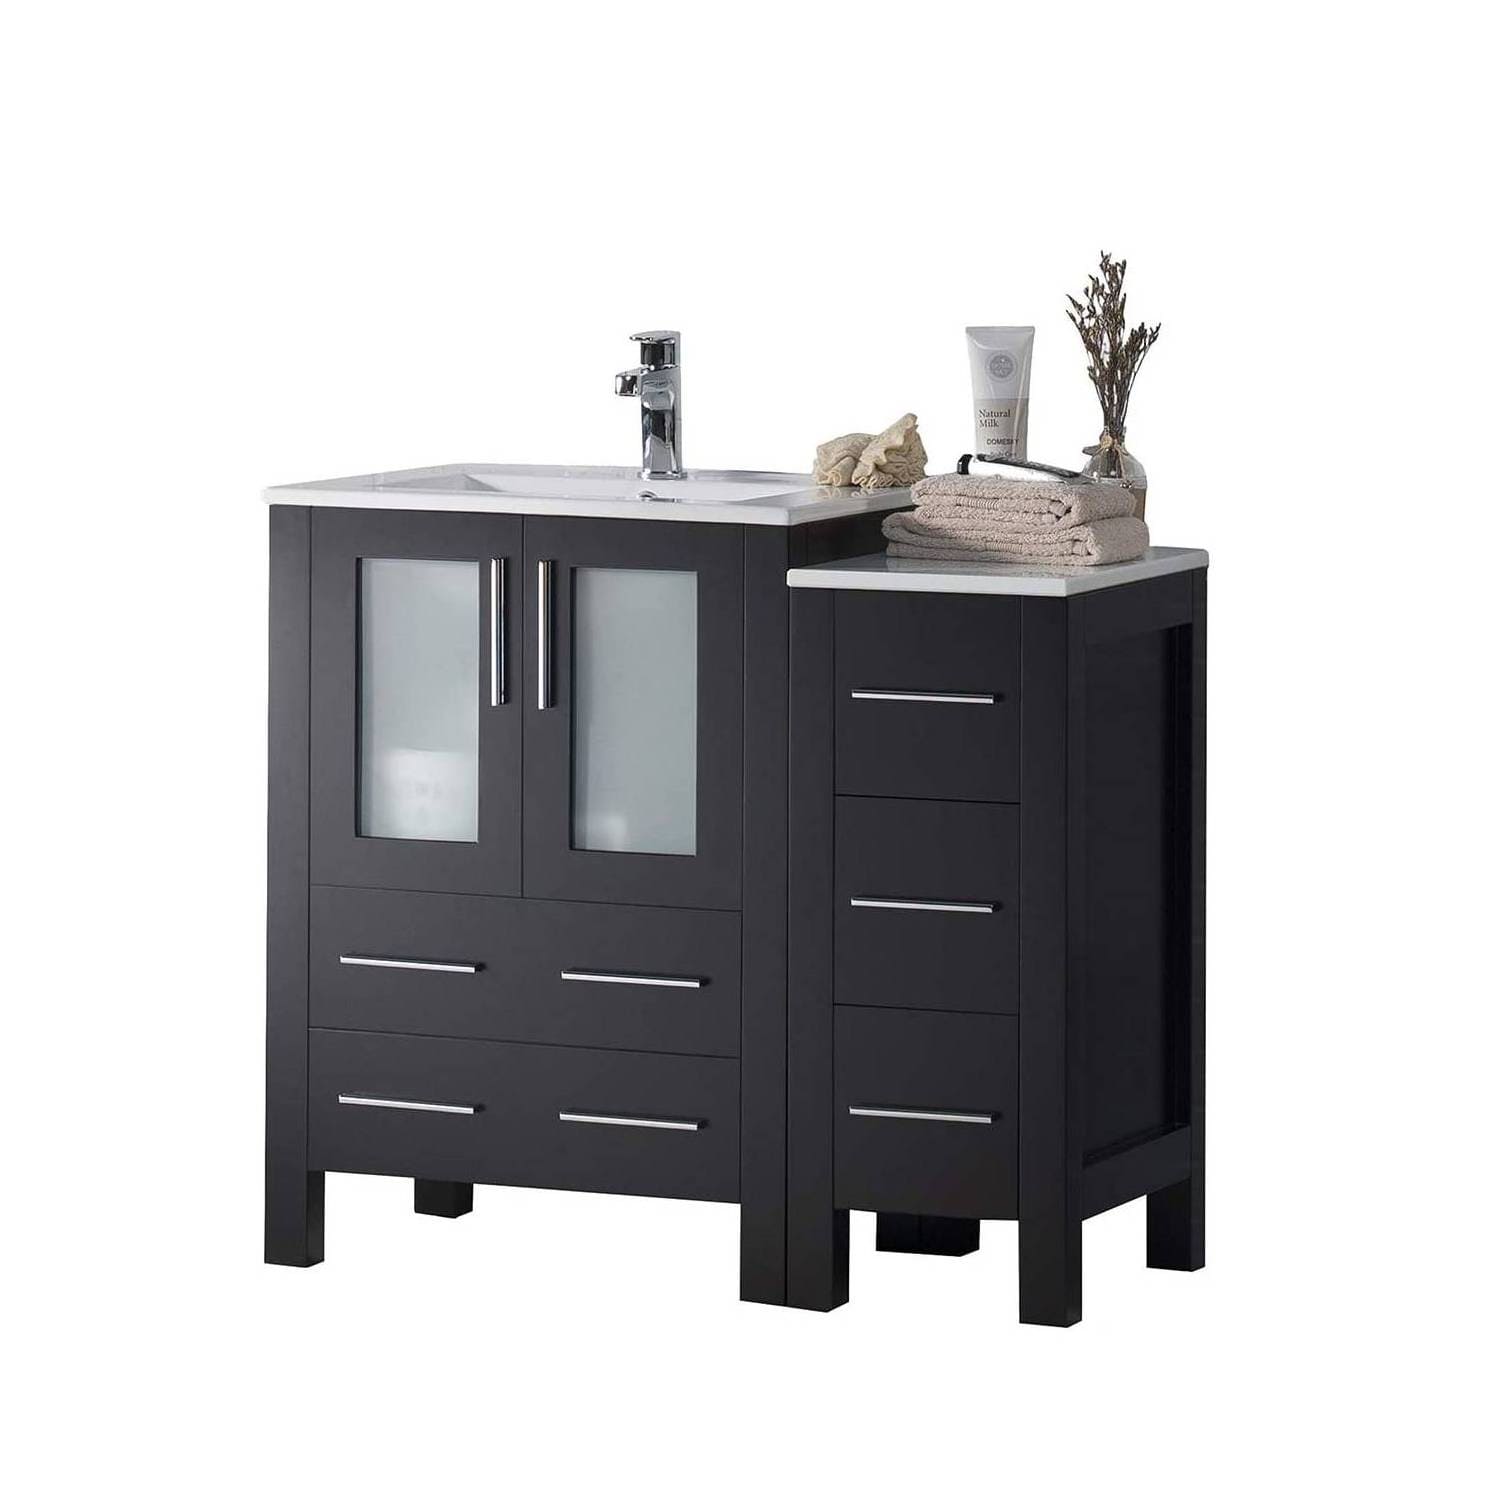 Sydney - 36 Inch Vanity with Ceramic Sink & Side Cabinet - Espresso - Molaix842708117938Sydney001 36S 02 C